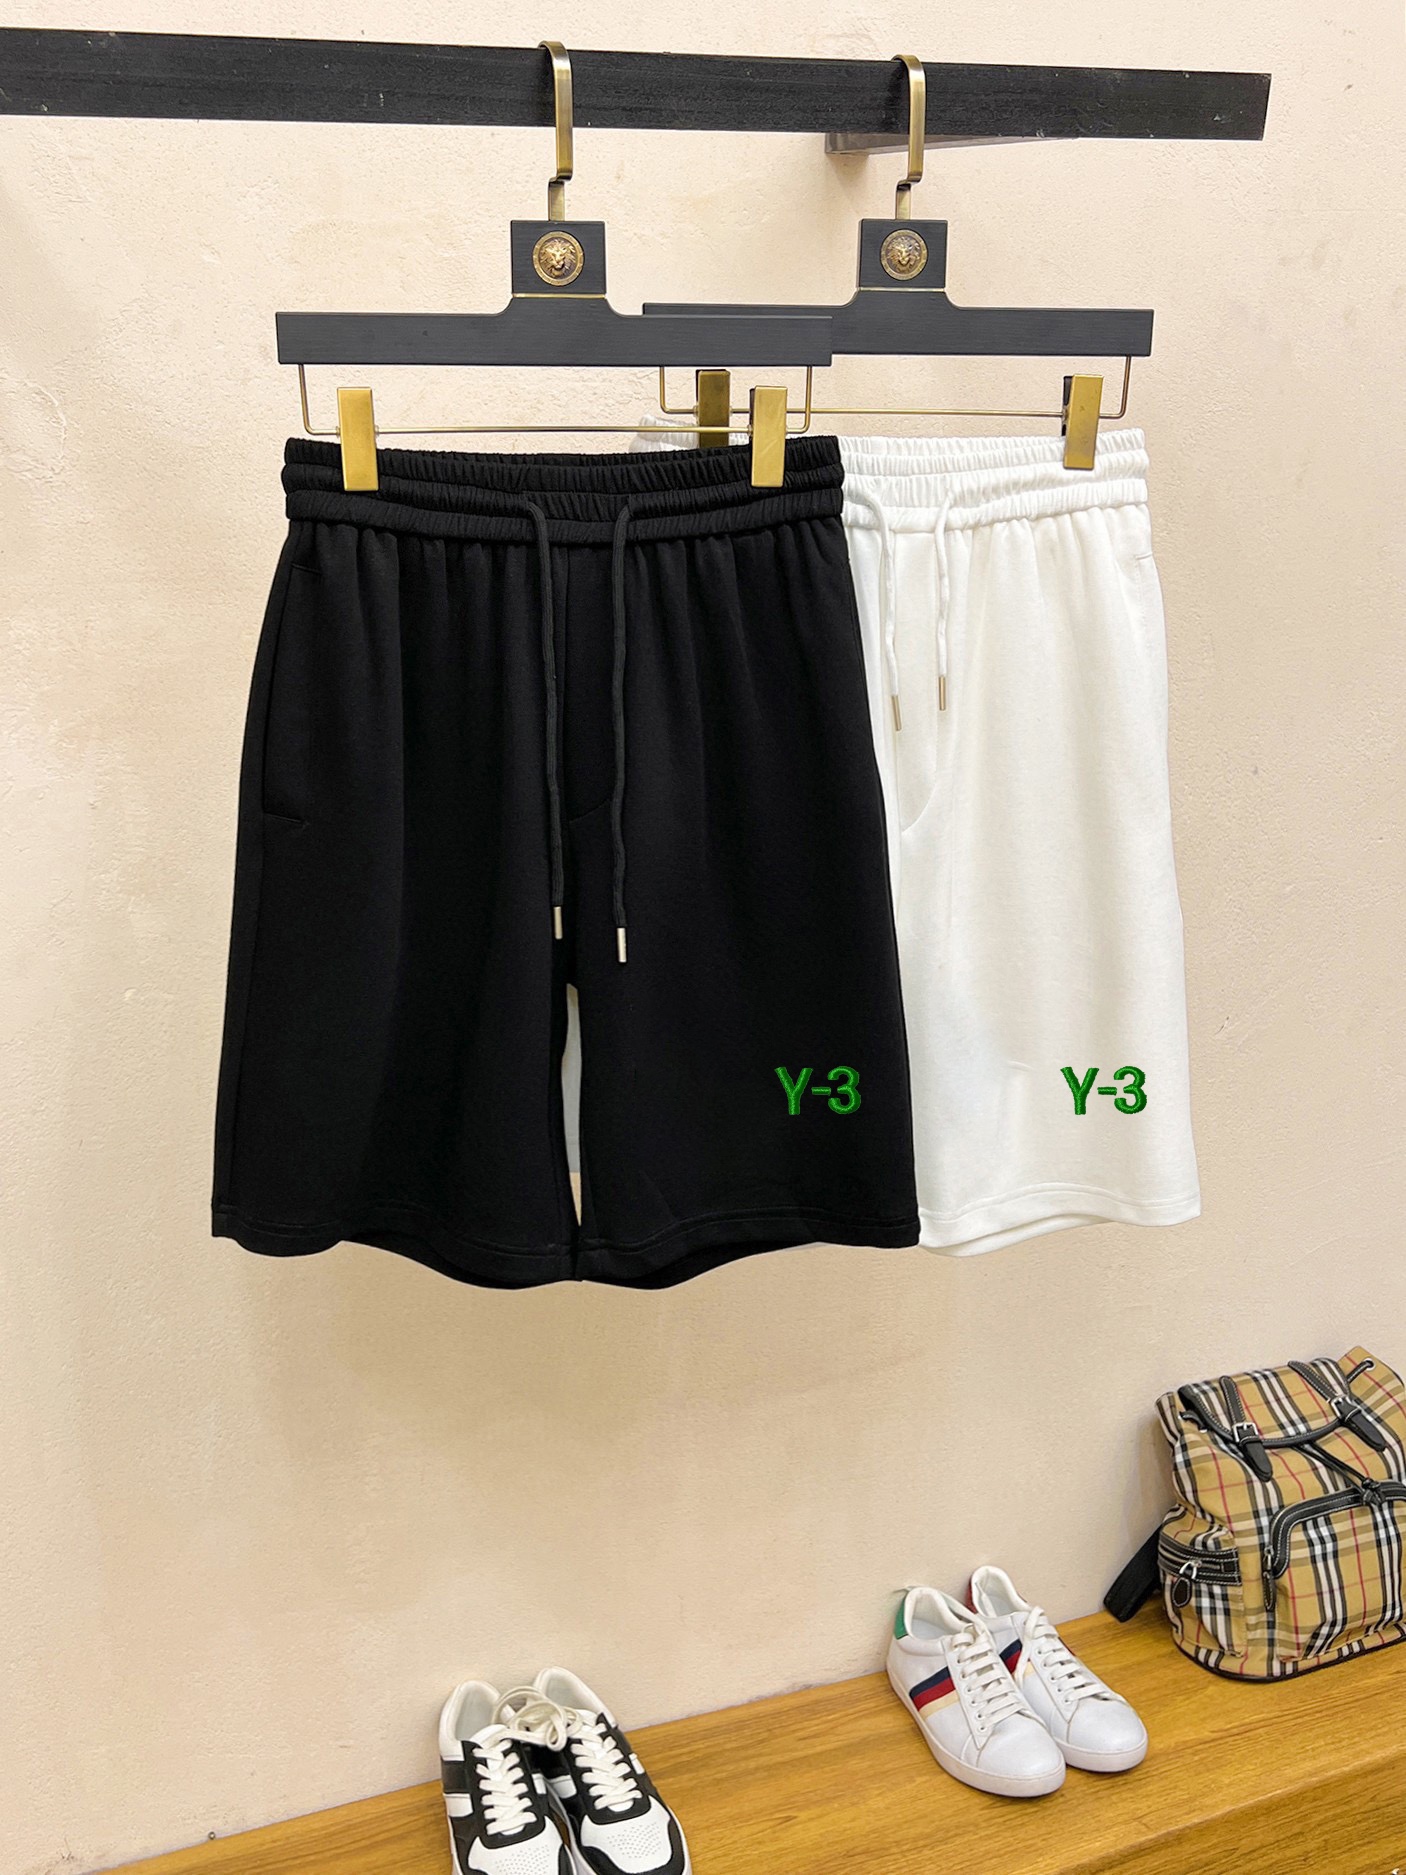 Y-3 AAAAA
 Clothing Shorts Men Summer Collection Casual